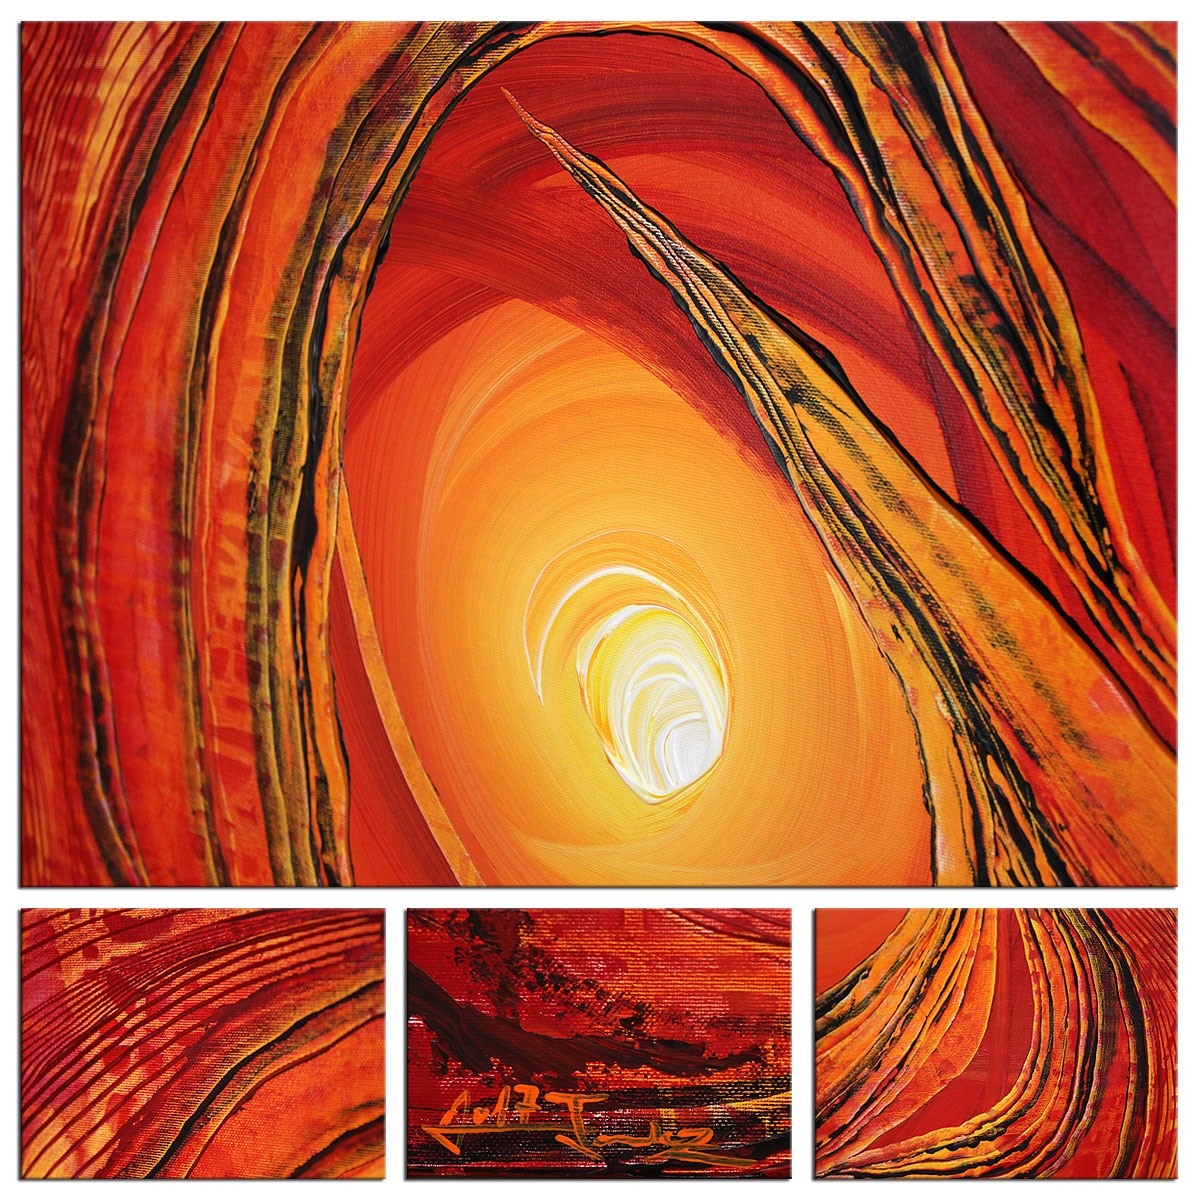 Acrylmalerei abstrakt, Julio Fernandez: "Moving Fire III"